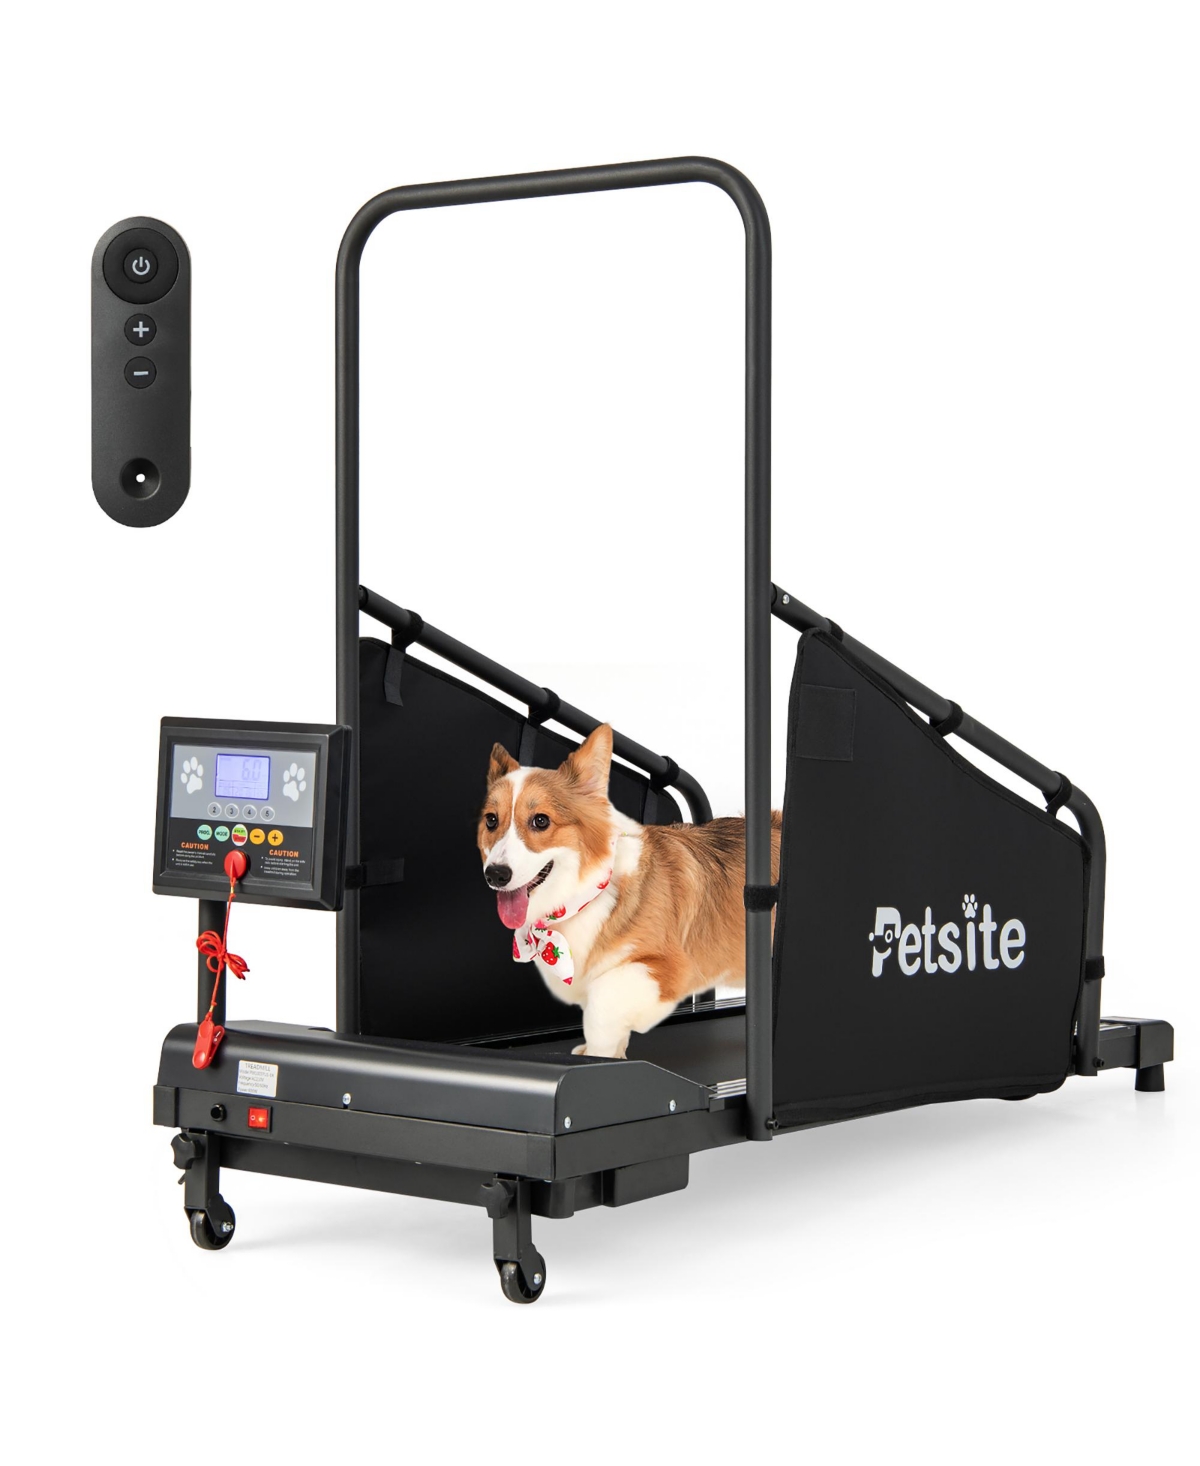 Dog Treadmill for Small/Medium Dogs Indoors Pet Running Training Machine - Black